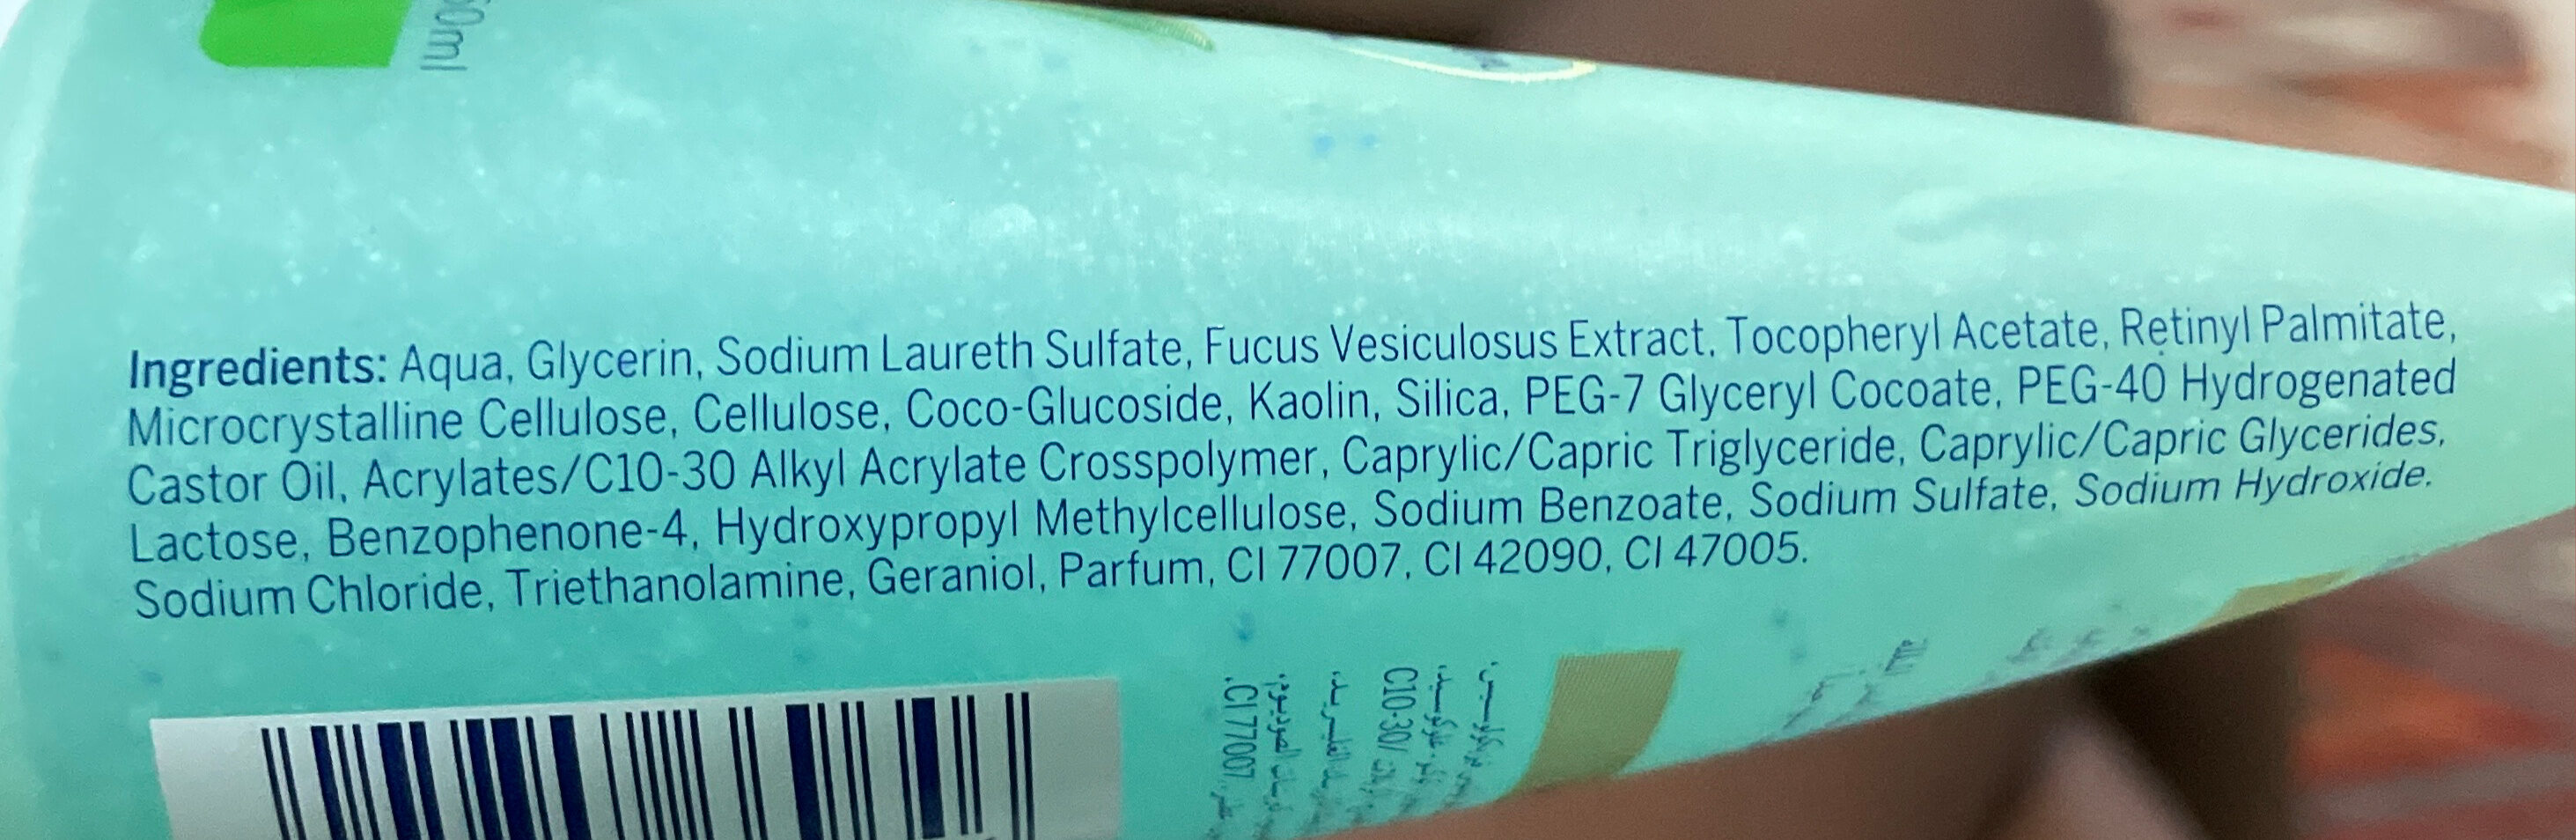 face wash purifying ocean algae - Ingredients - fr